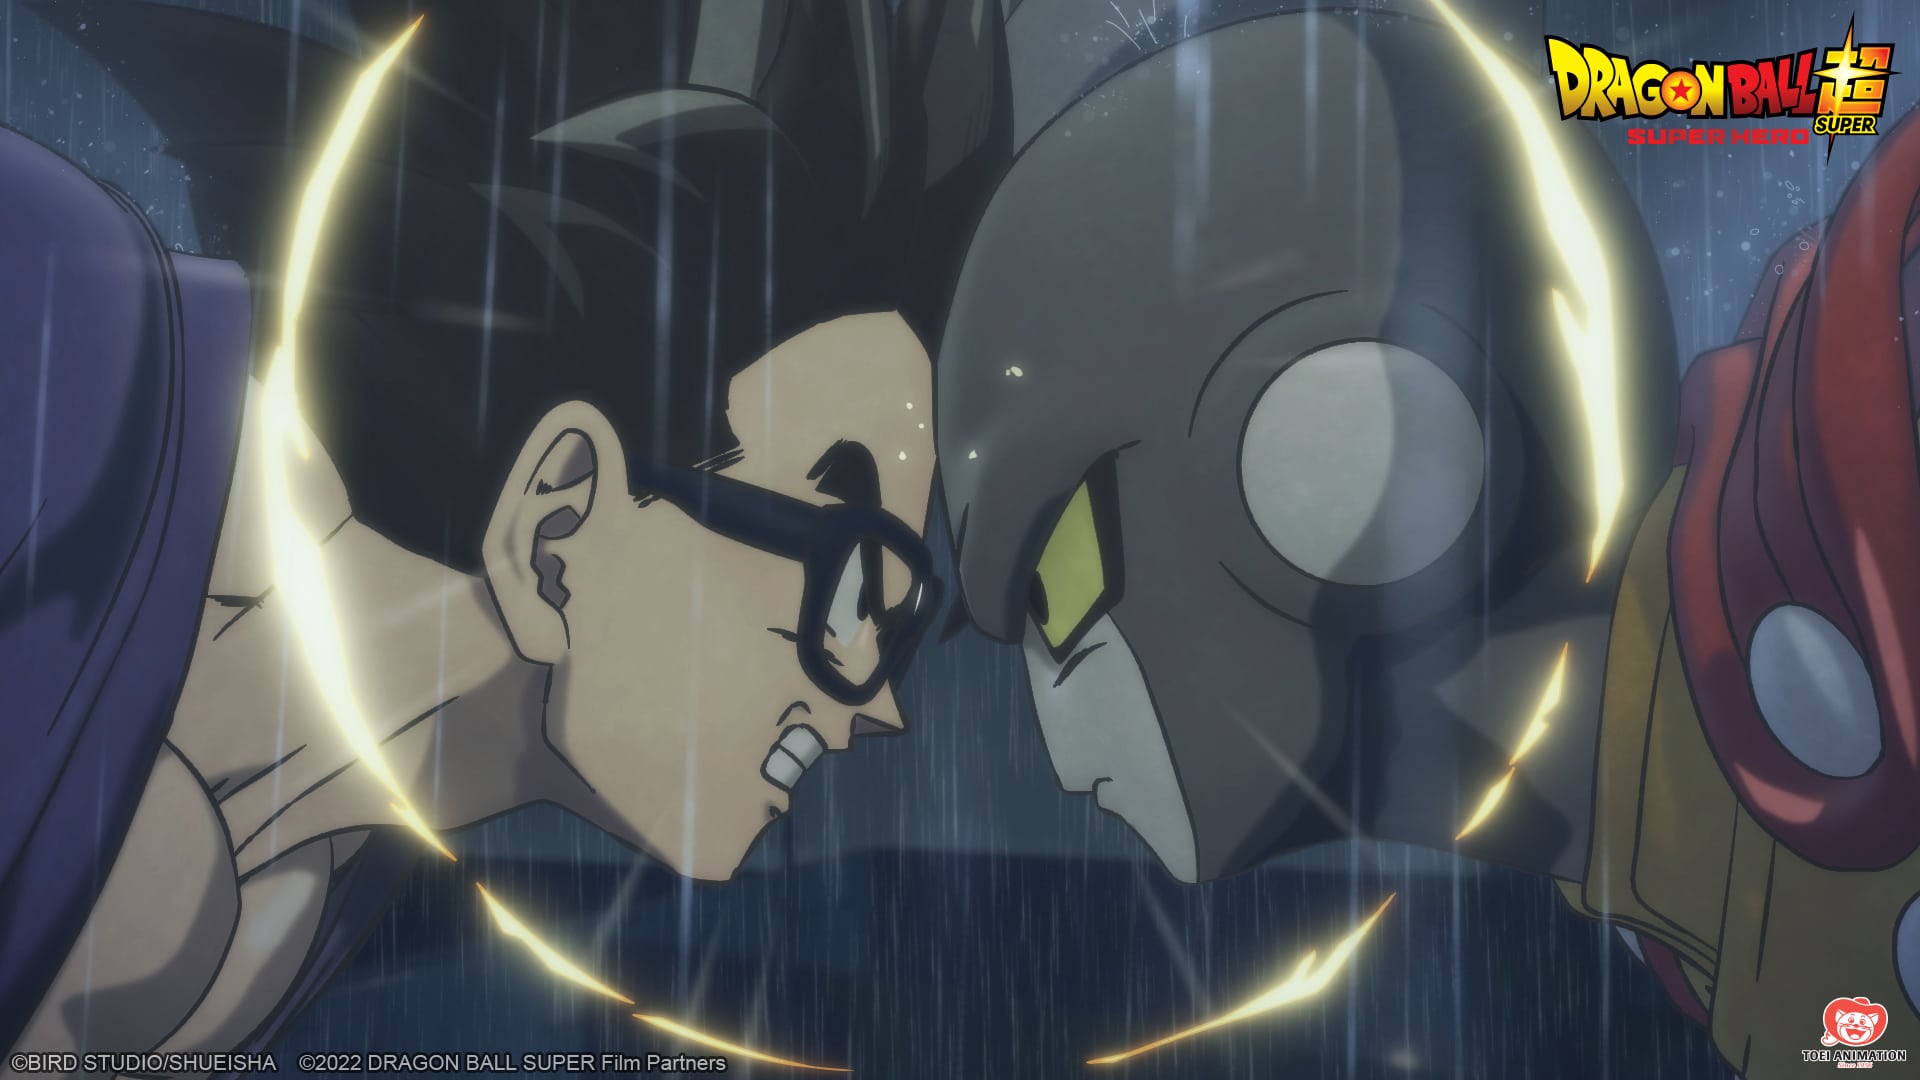 Gohan battles in Dragon Ball Super: SUPER HERO. Art © Toei Animation, Crunchyroll, Sony Pictures